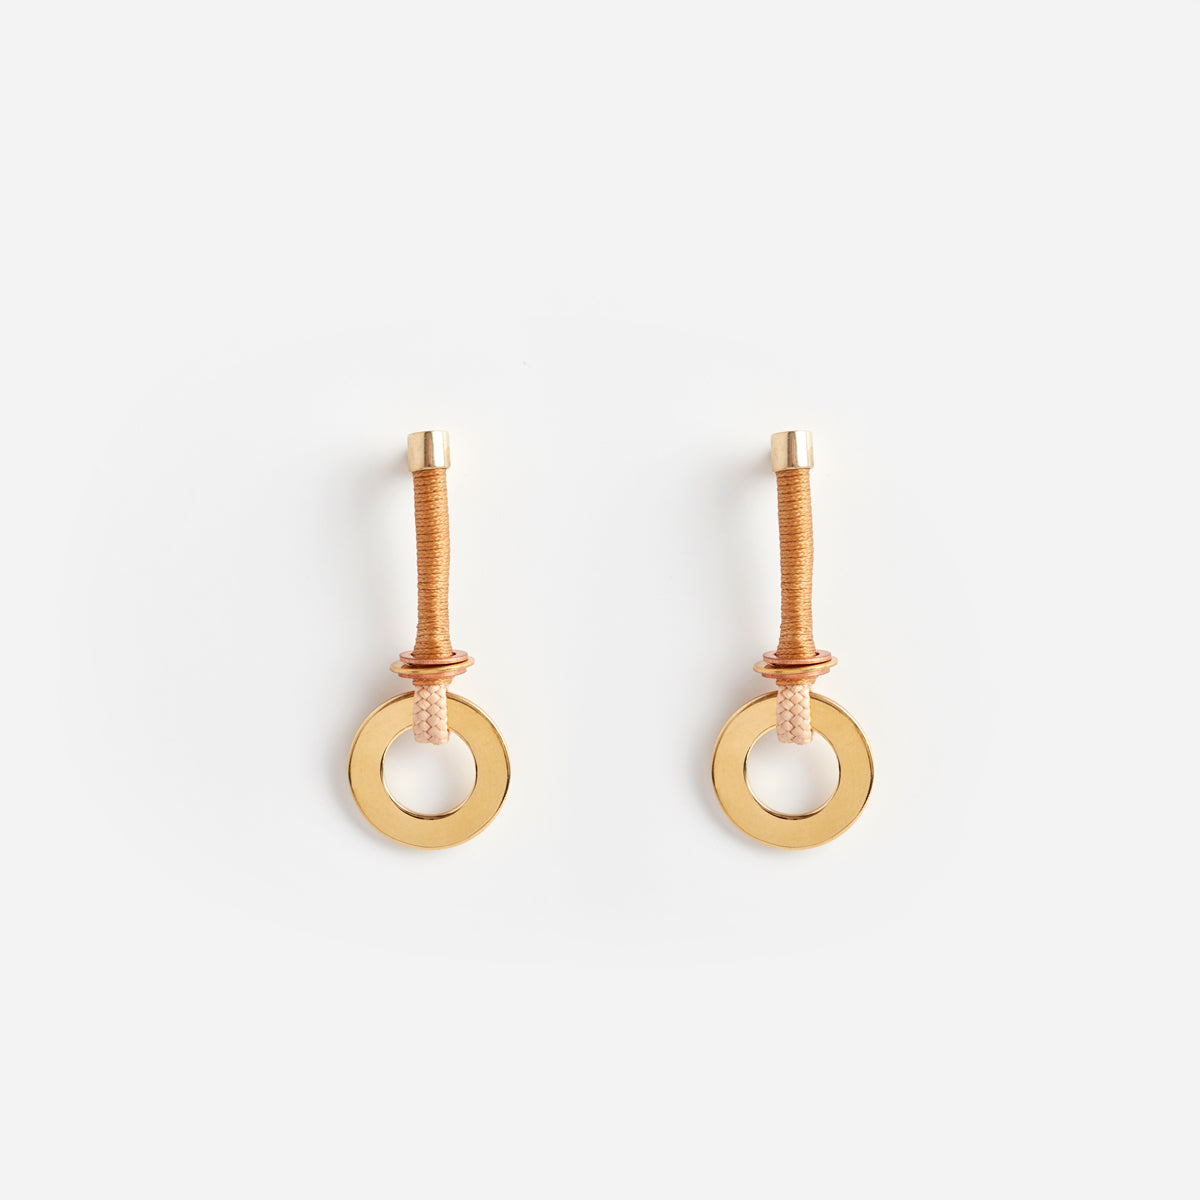 PICHULIK | Kosmos Earrings | Brass and Rope Jewellery